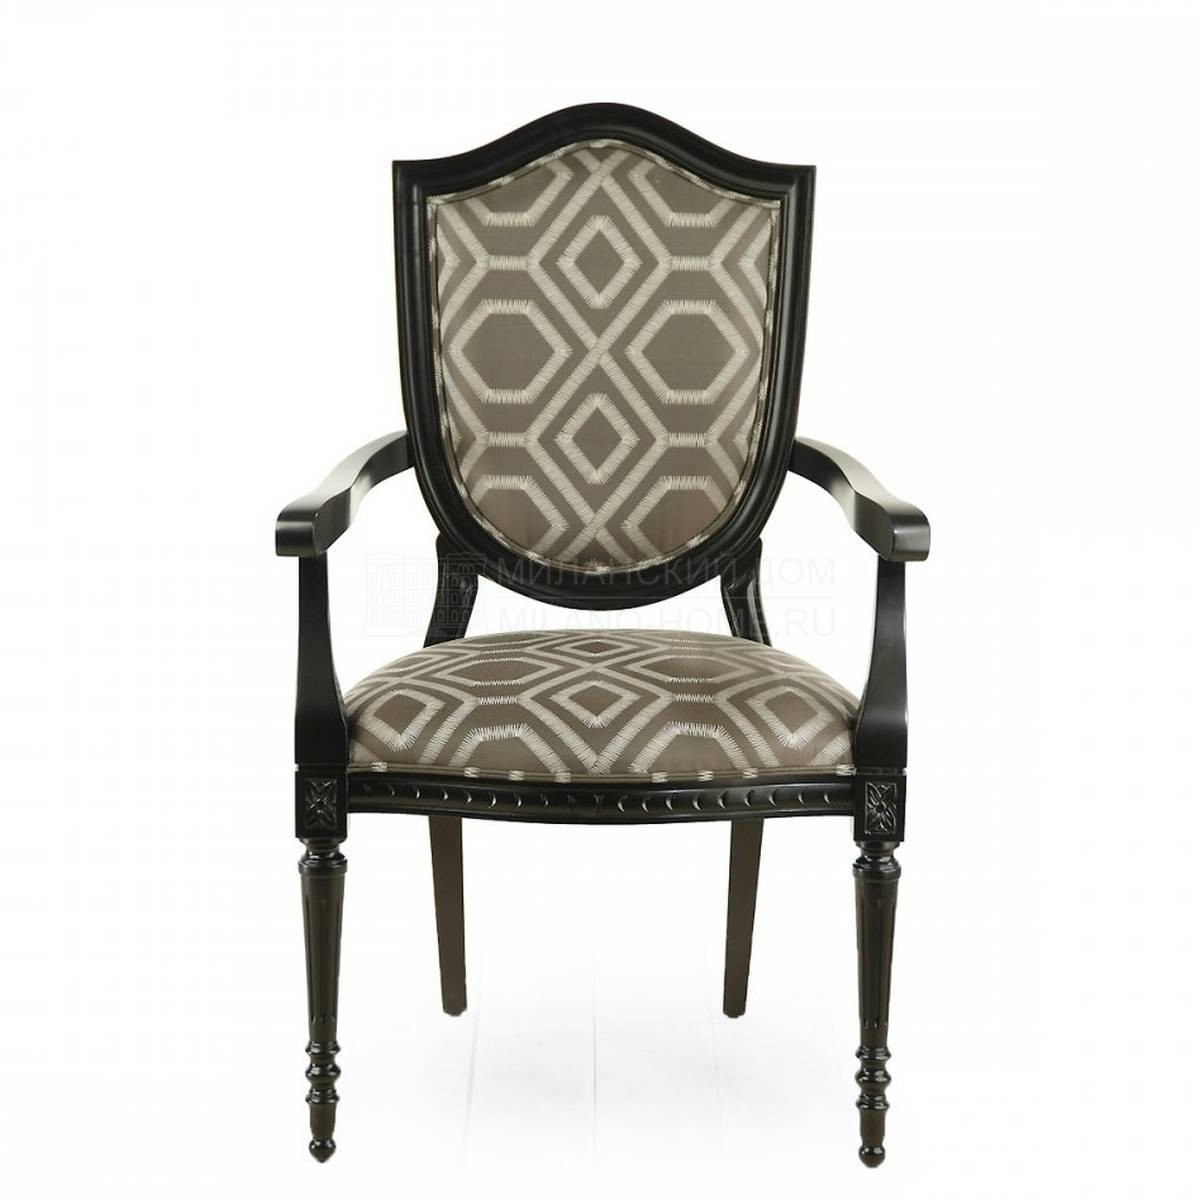 Полукресло Bristol padded chair with armrests из Италии фабрики MARIONI